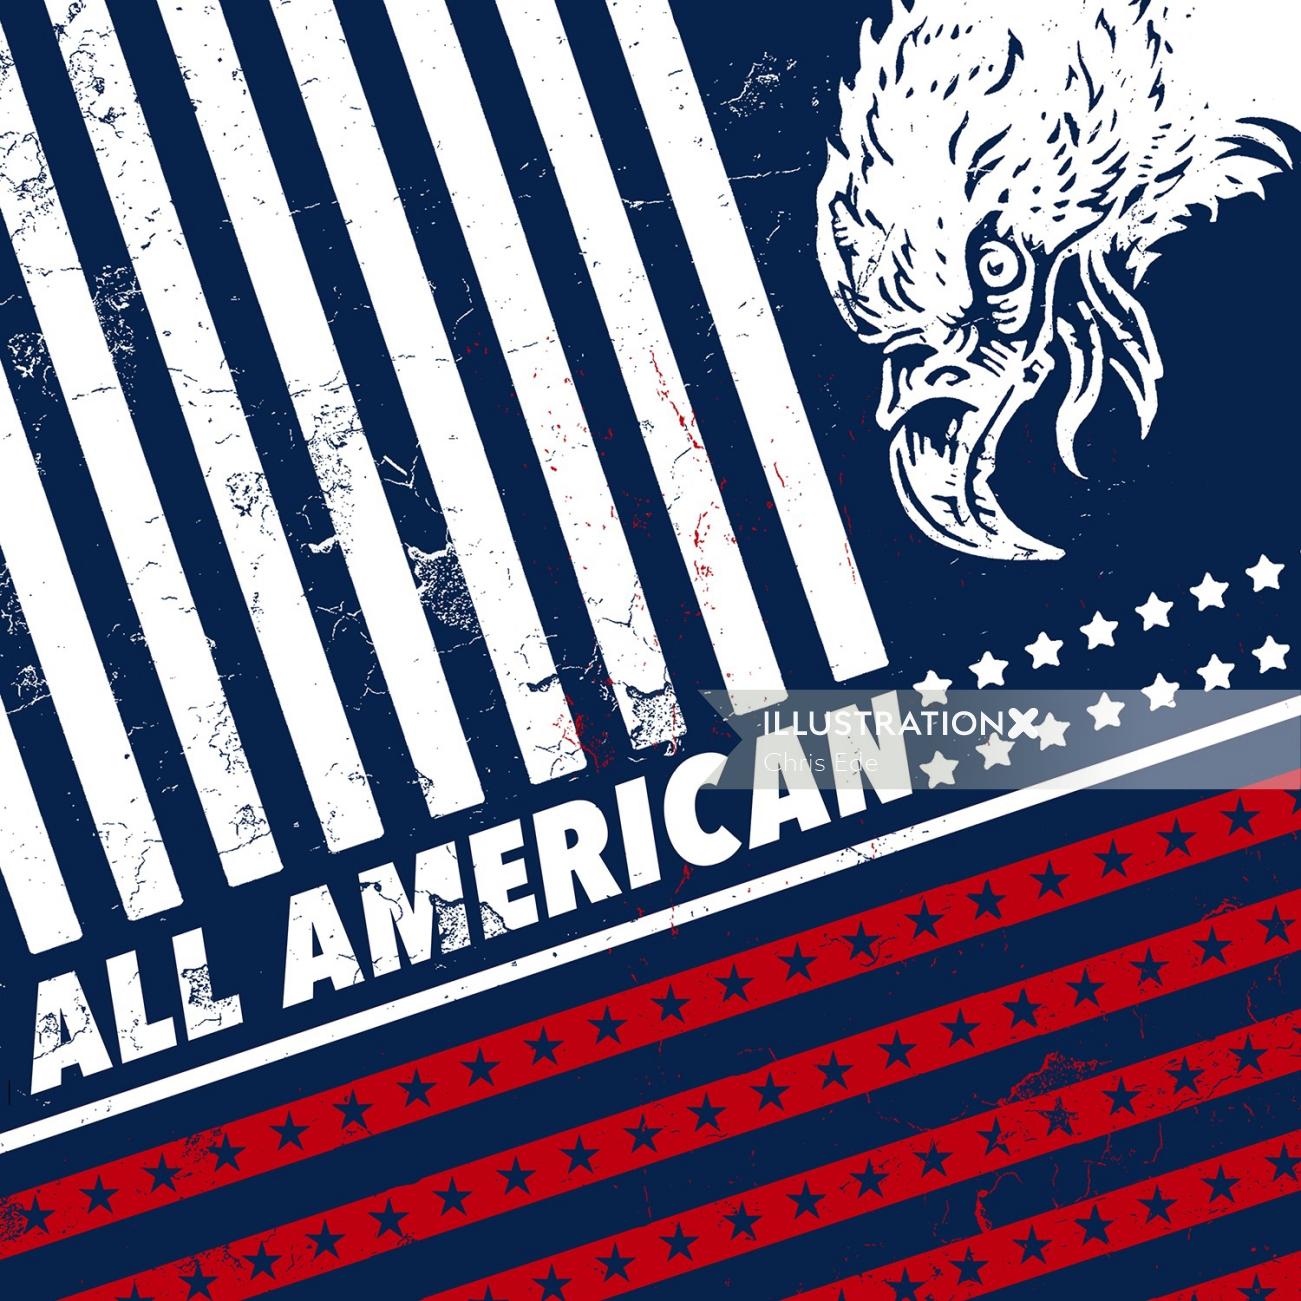 Americana eagle flag